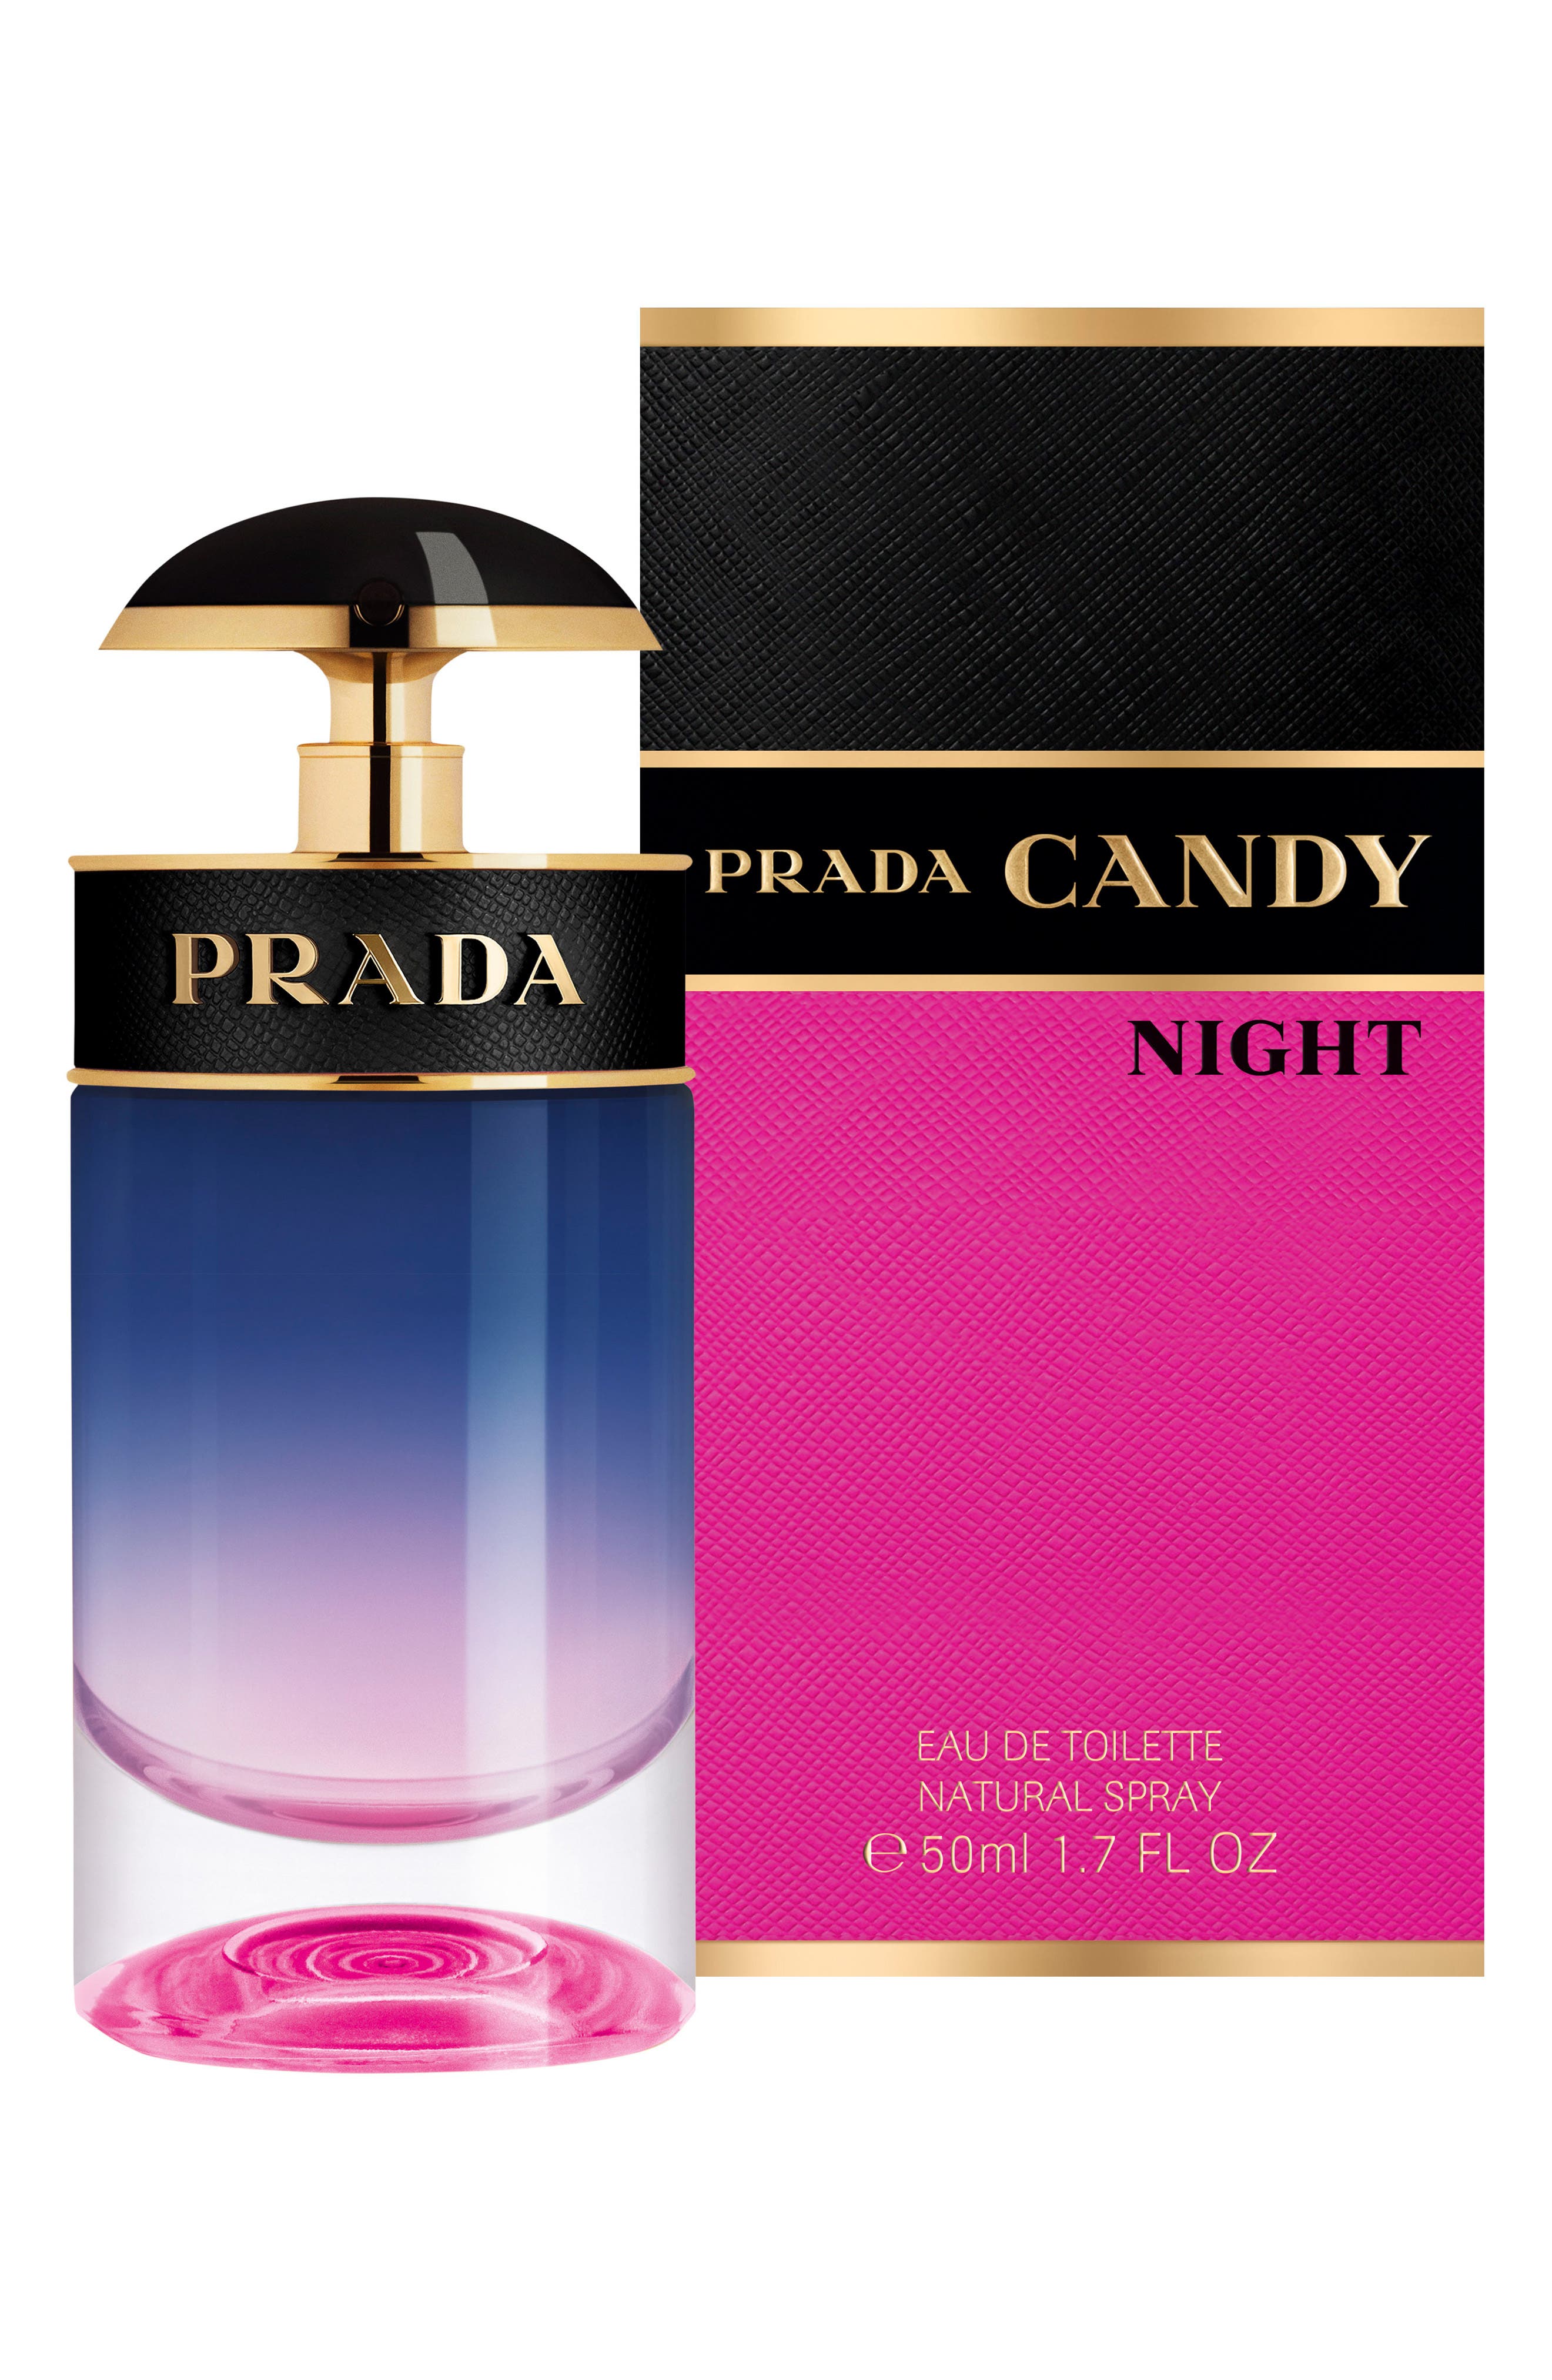 Prada Candy Night Eau de Parfum at Nordstrom, Size 1.7 Oz